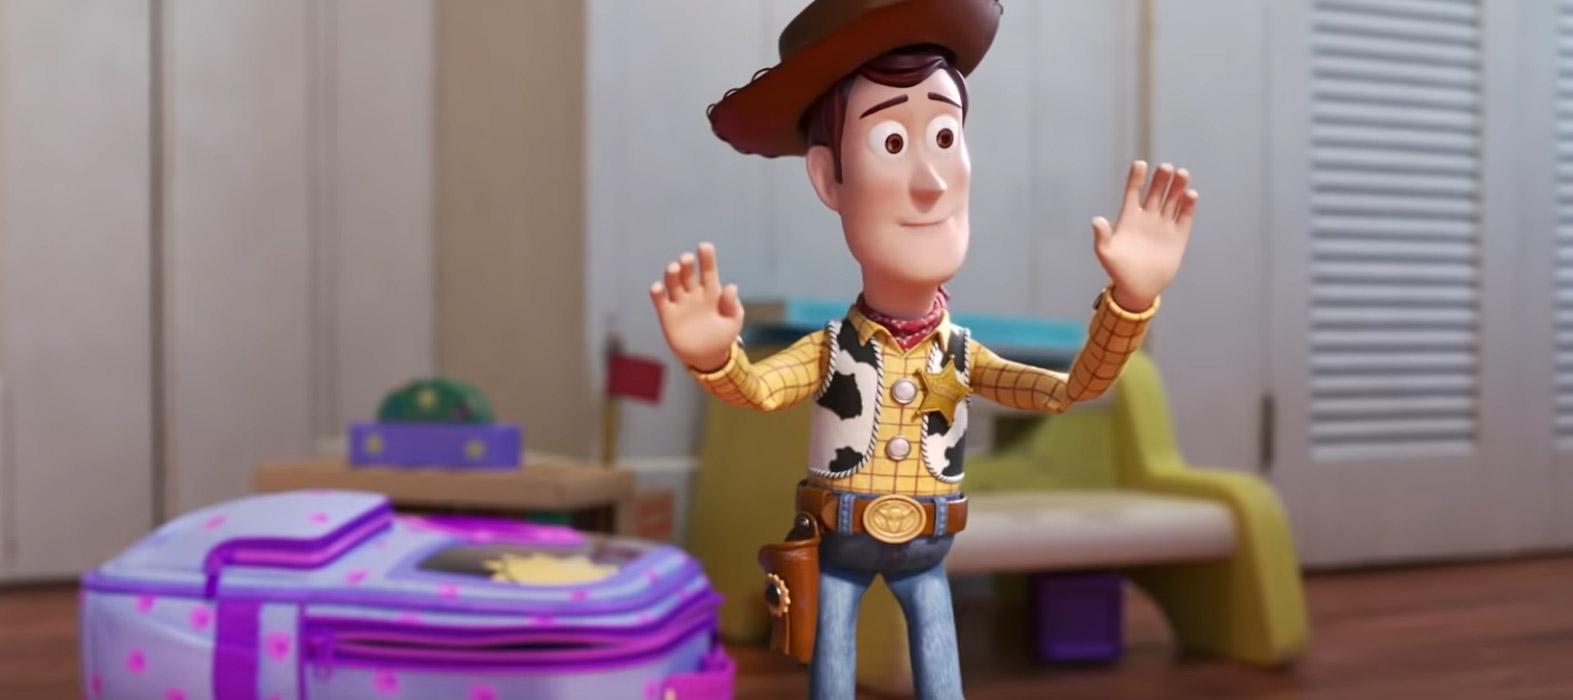 Toy Story 4, Trailer Italiano Ufficiale